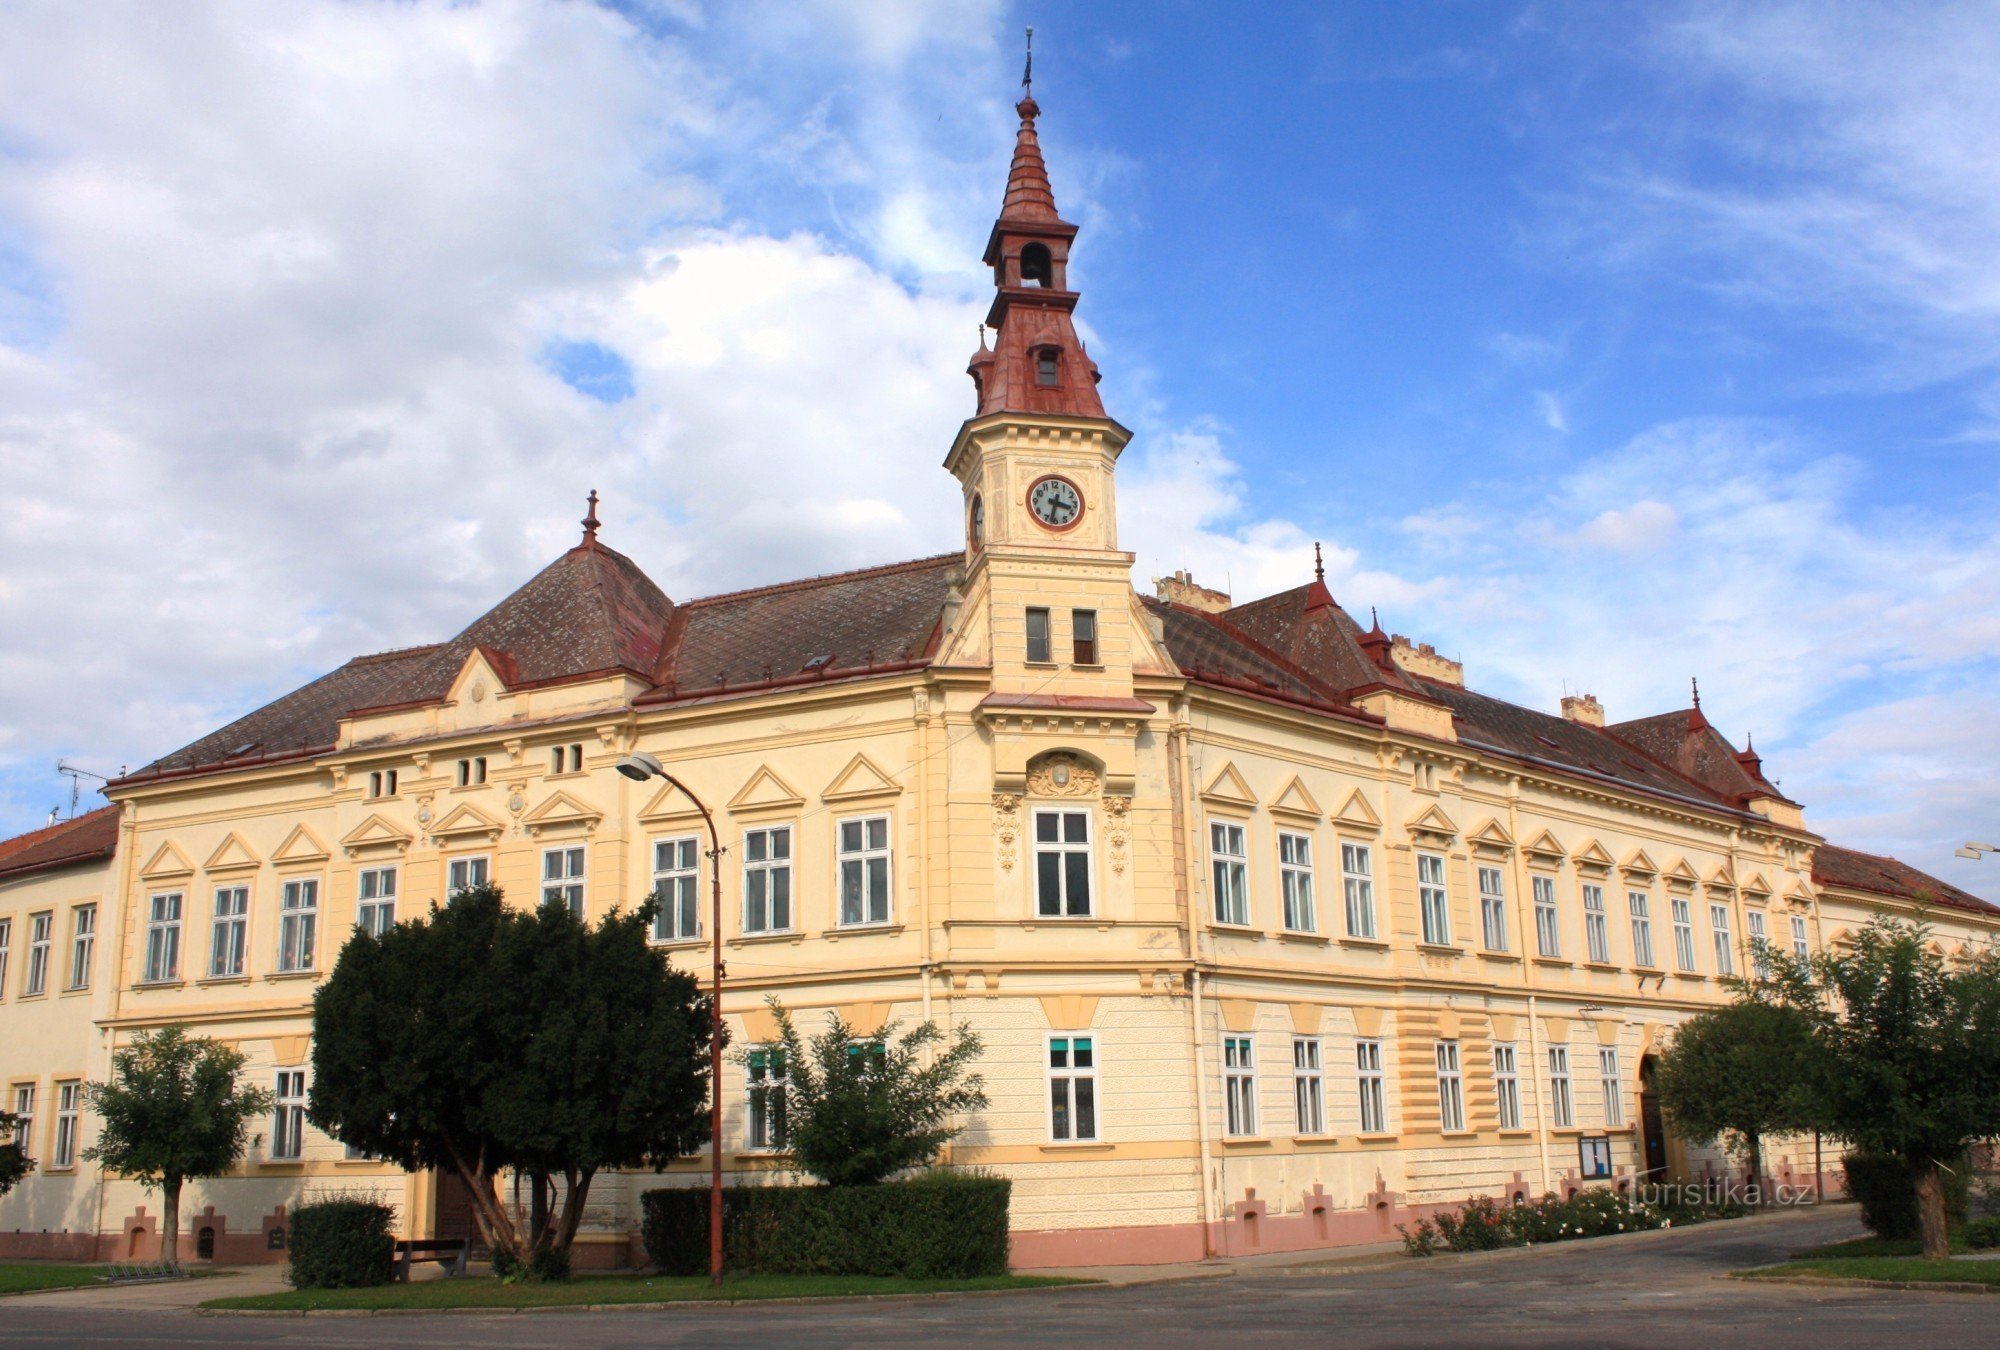 Jaroslavice - town hall